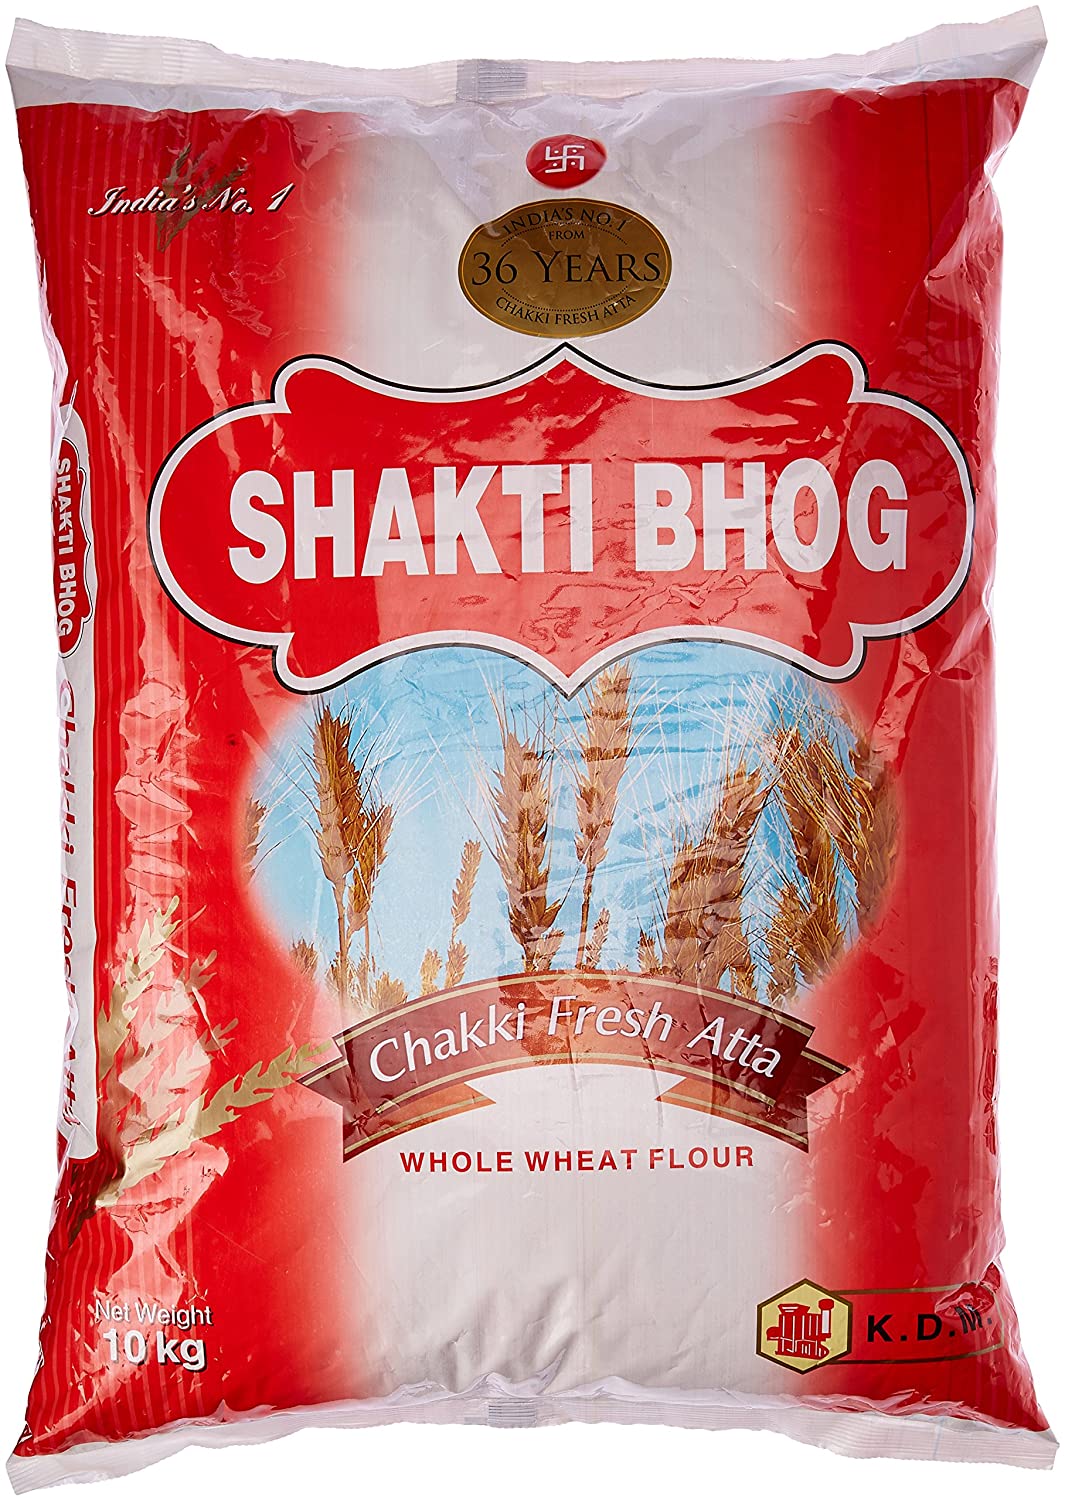 Image of Shakti bhog aata